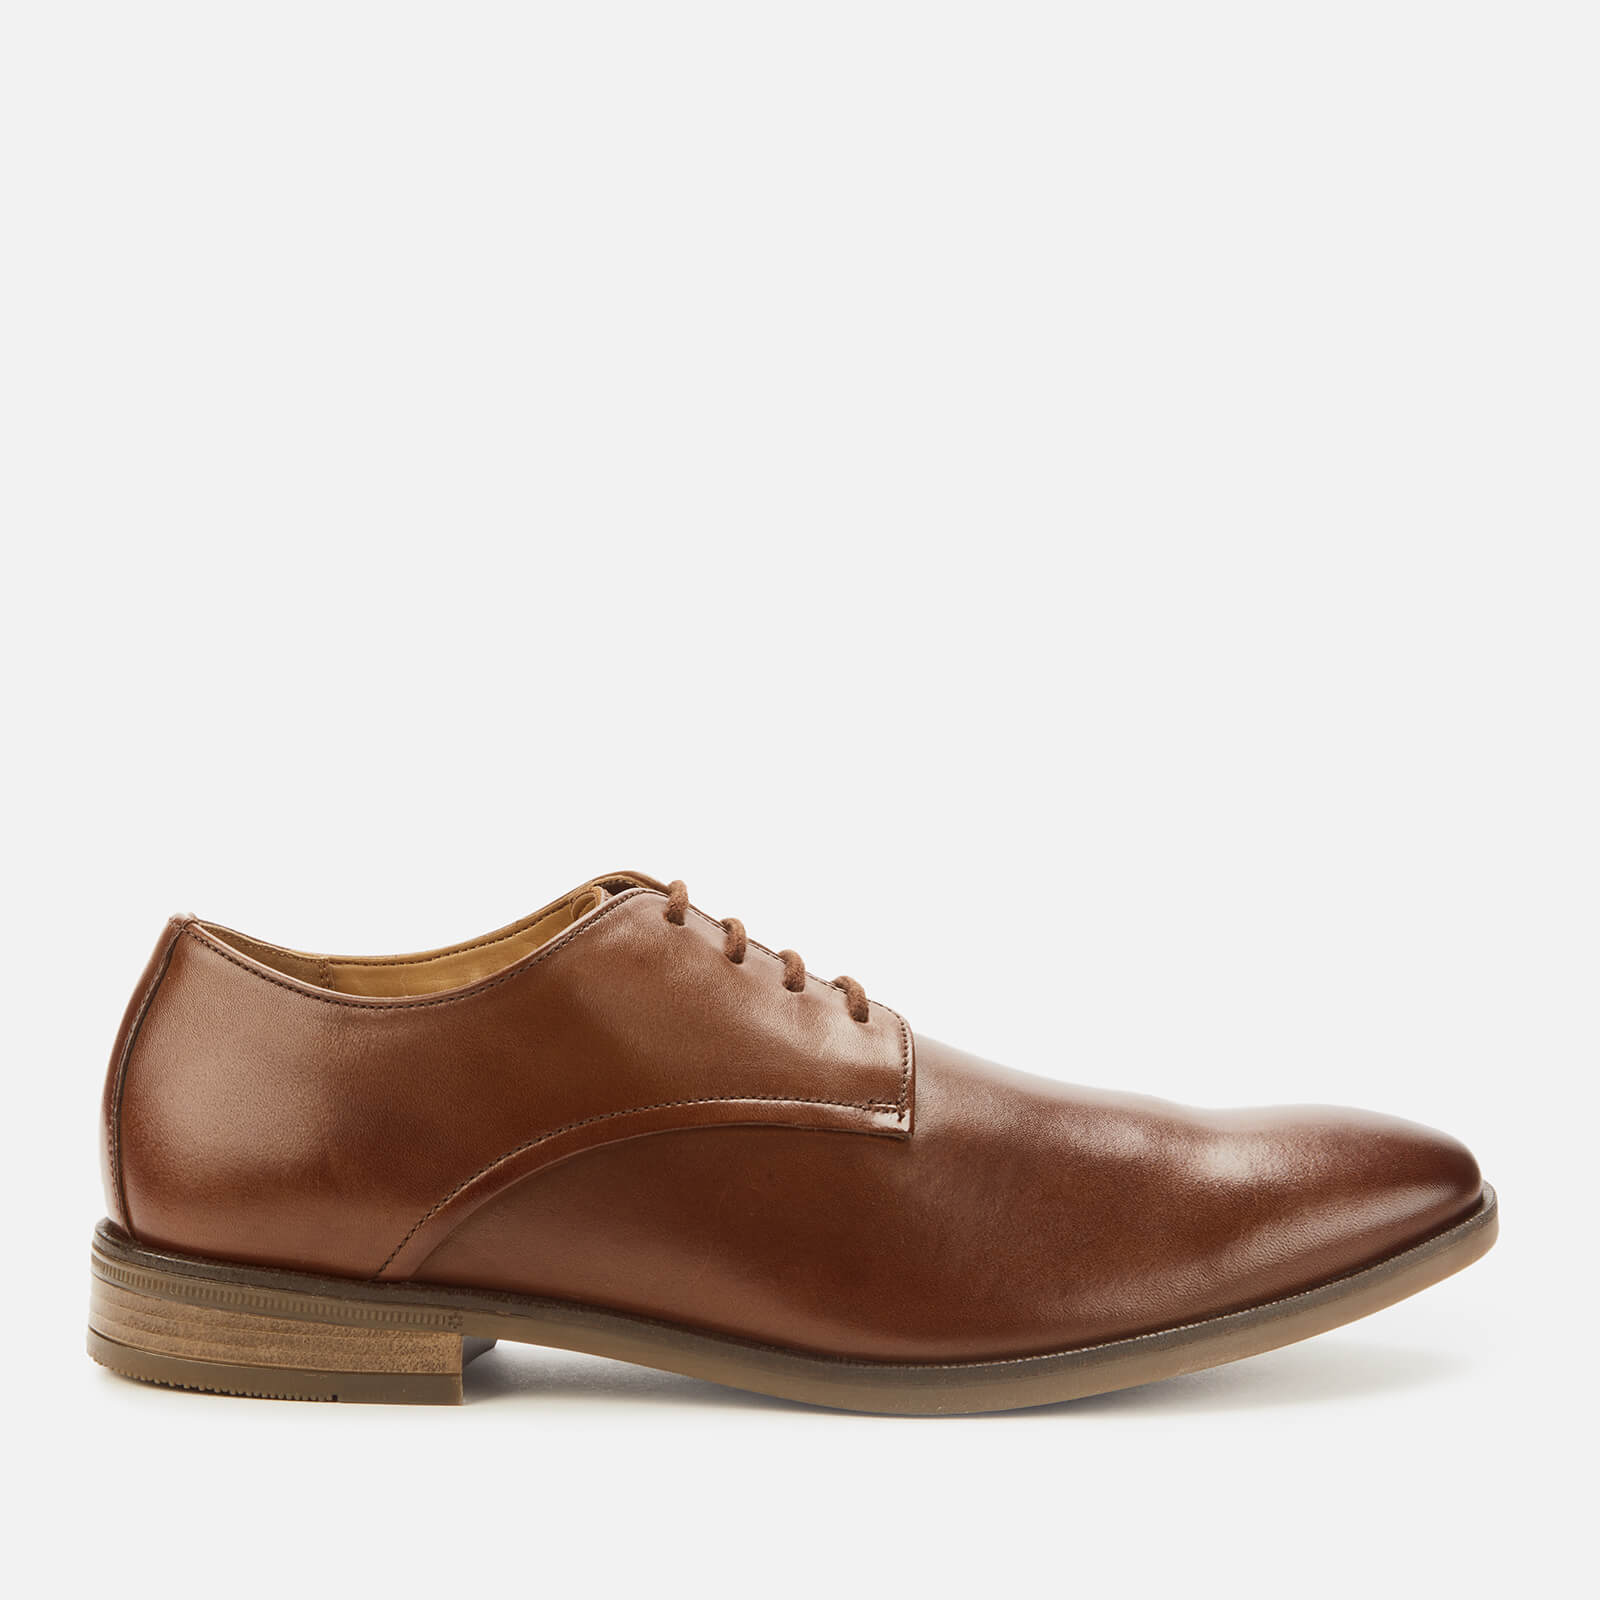 Clarks Men's Stanford Walk Leather Derby Shoes - Tan - UK 7